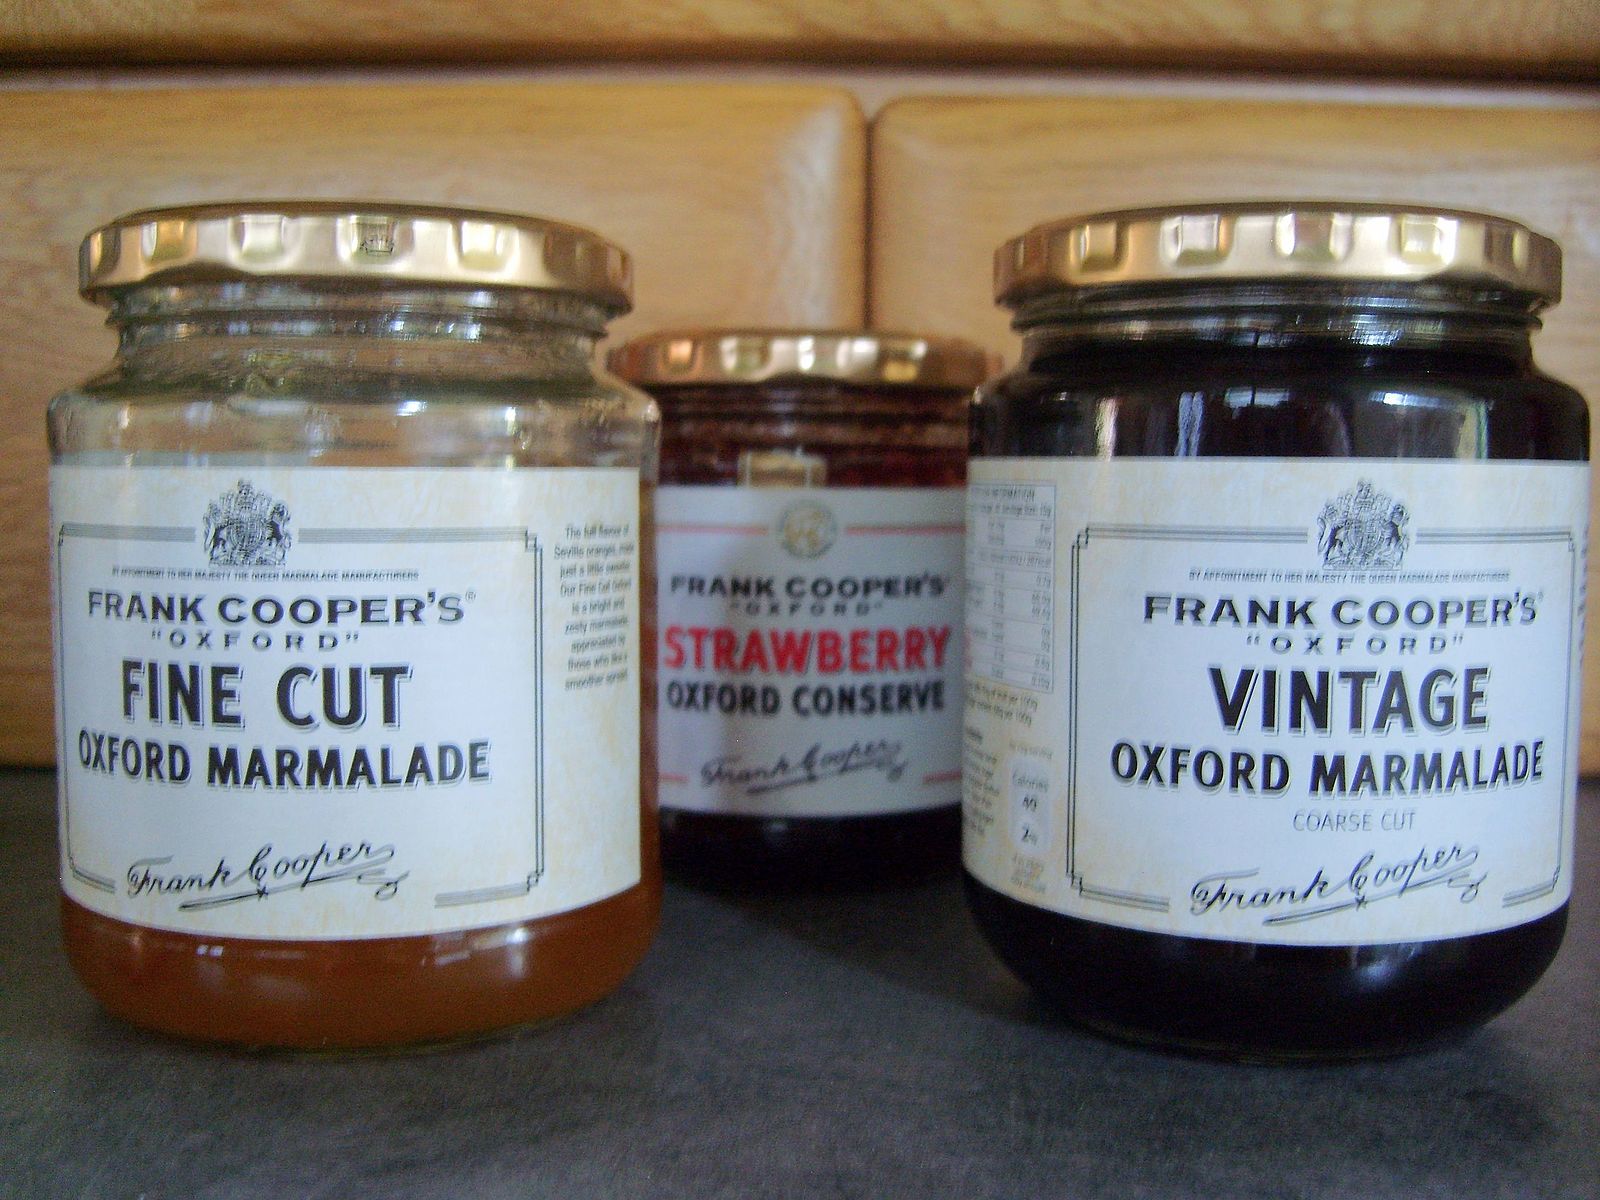 Frank Cooper's Original Oxford Marmalade